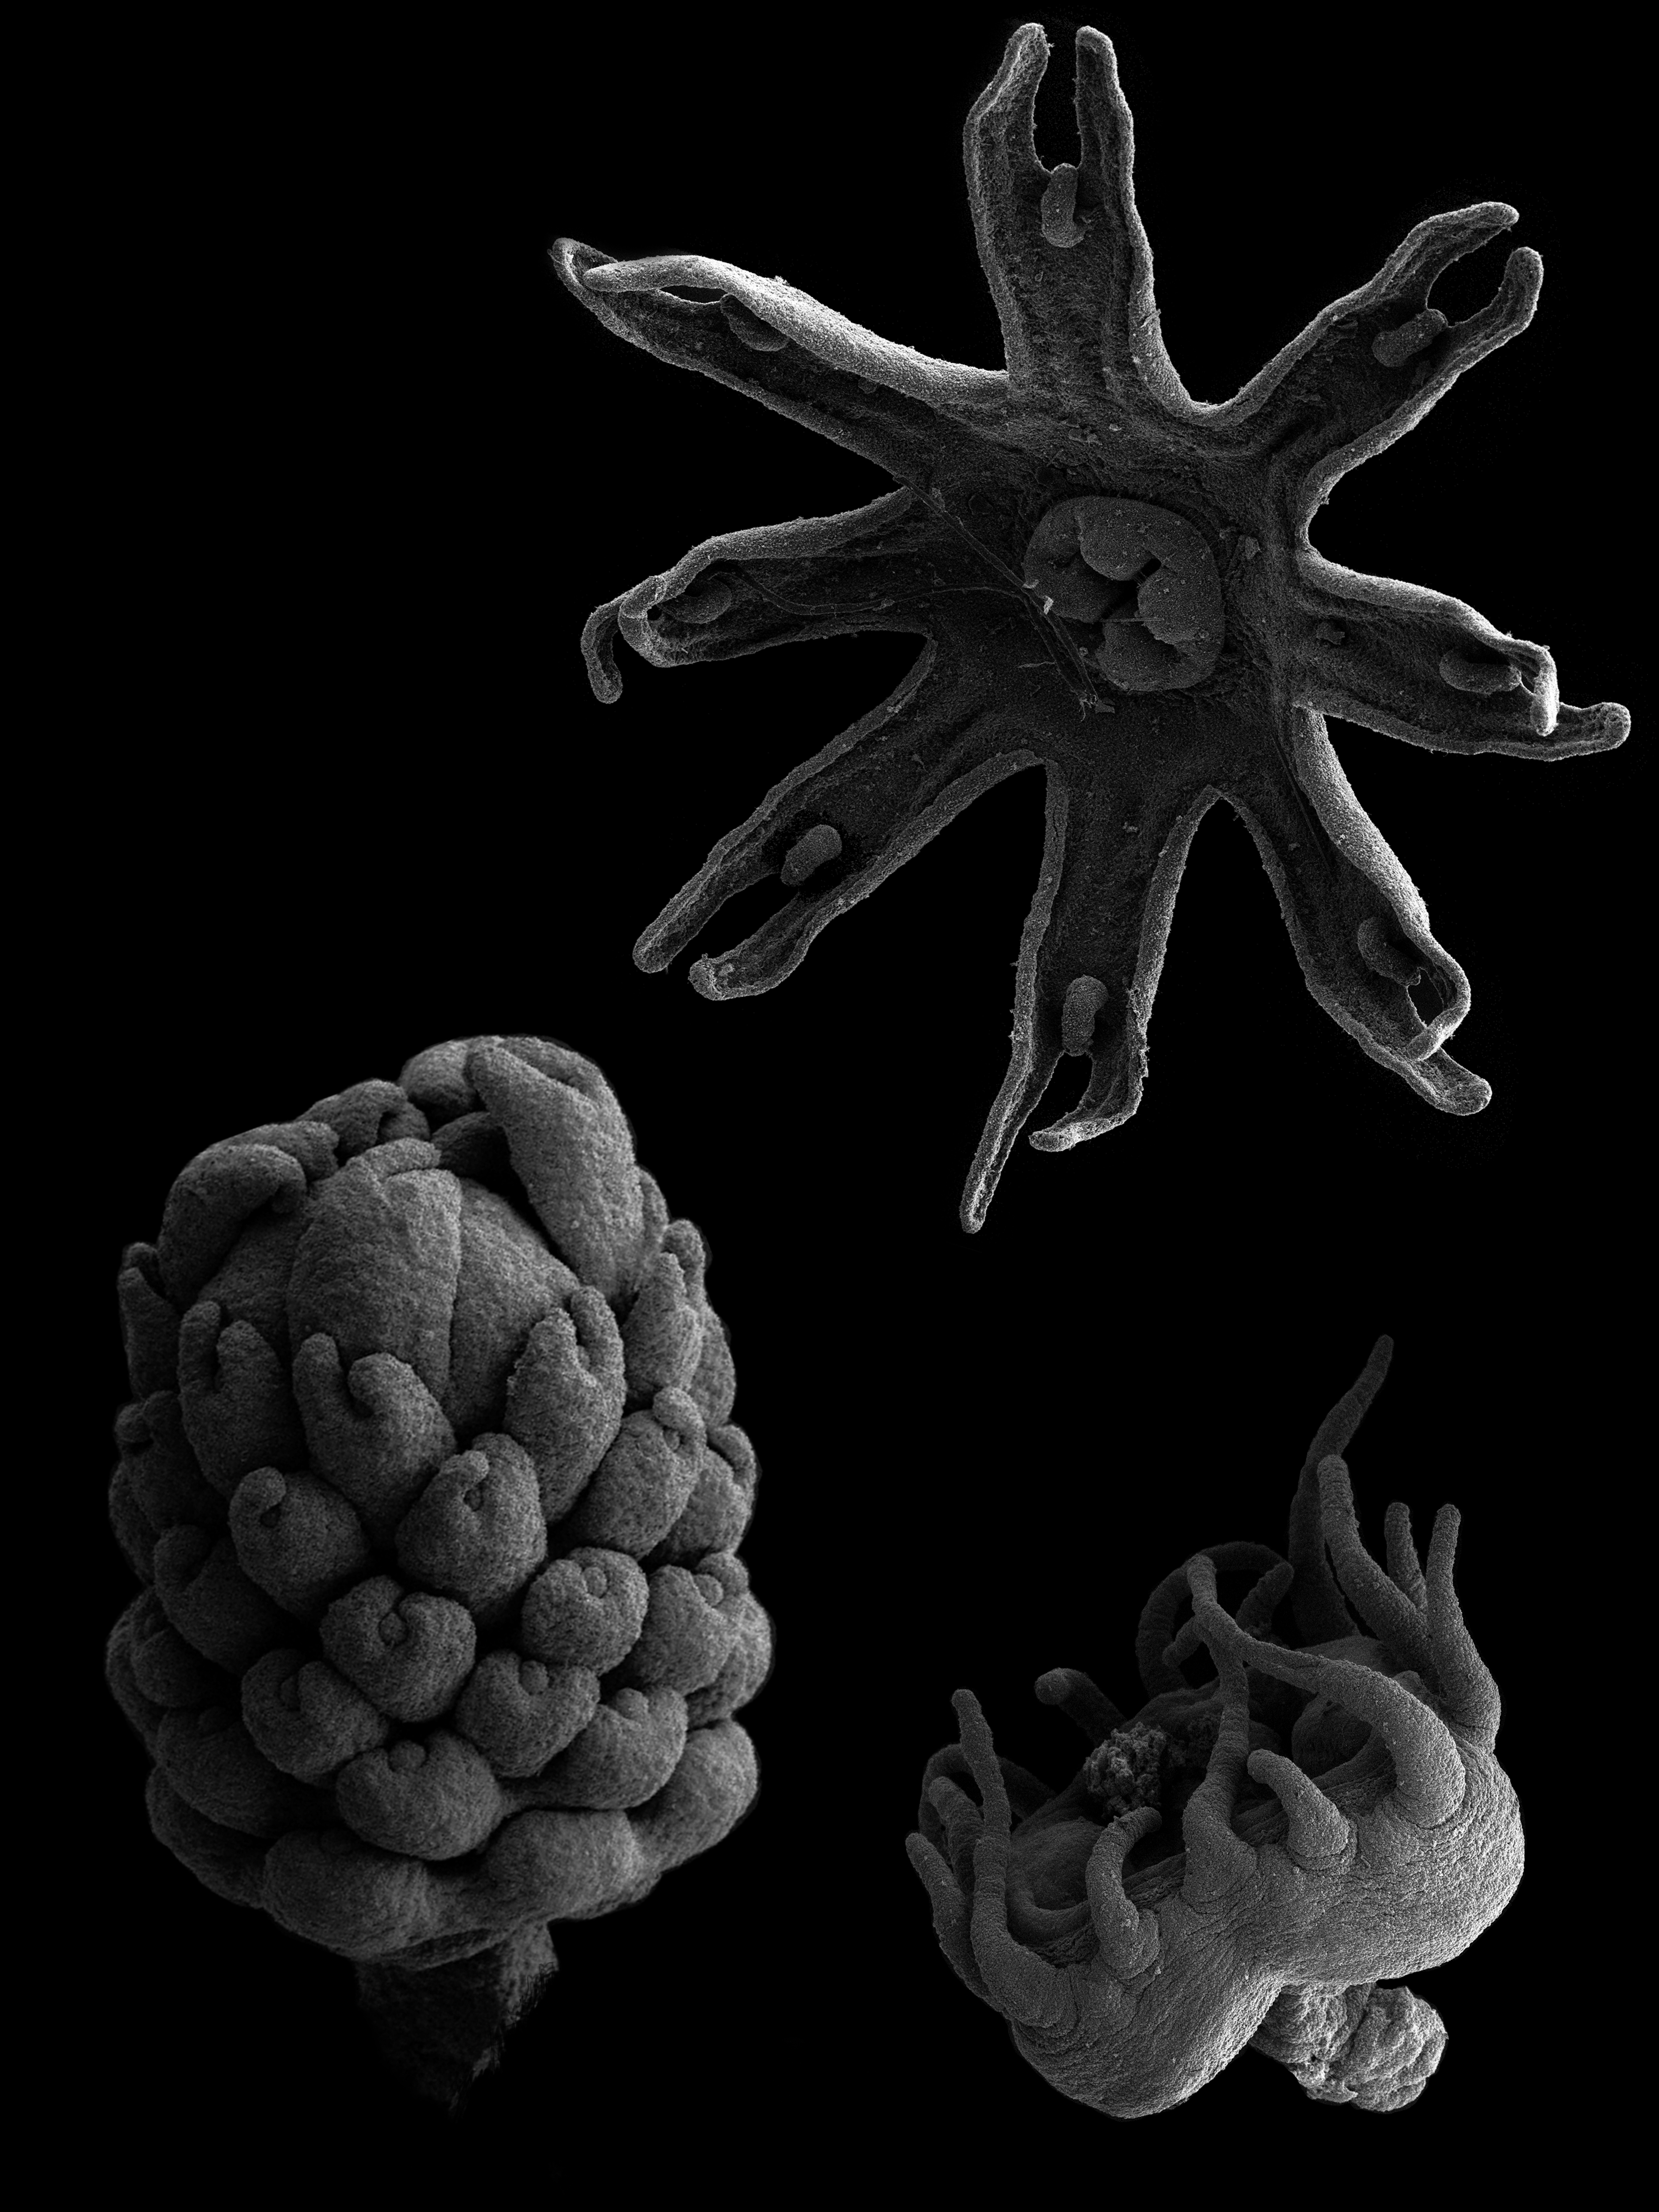 Life cycle stages of Aurelia jellyfish - polyp, strobila and ephyra. Photo by Dr. Friederike Anton-Erxleben